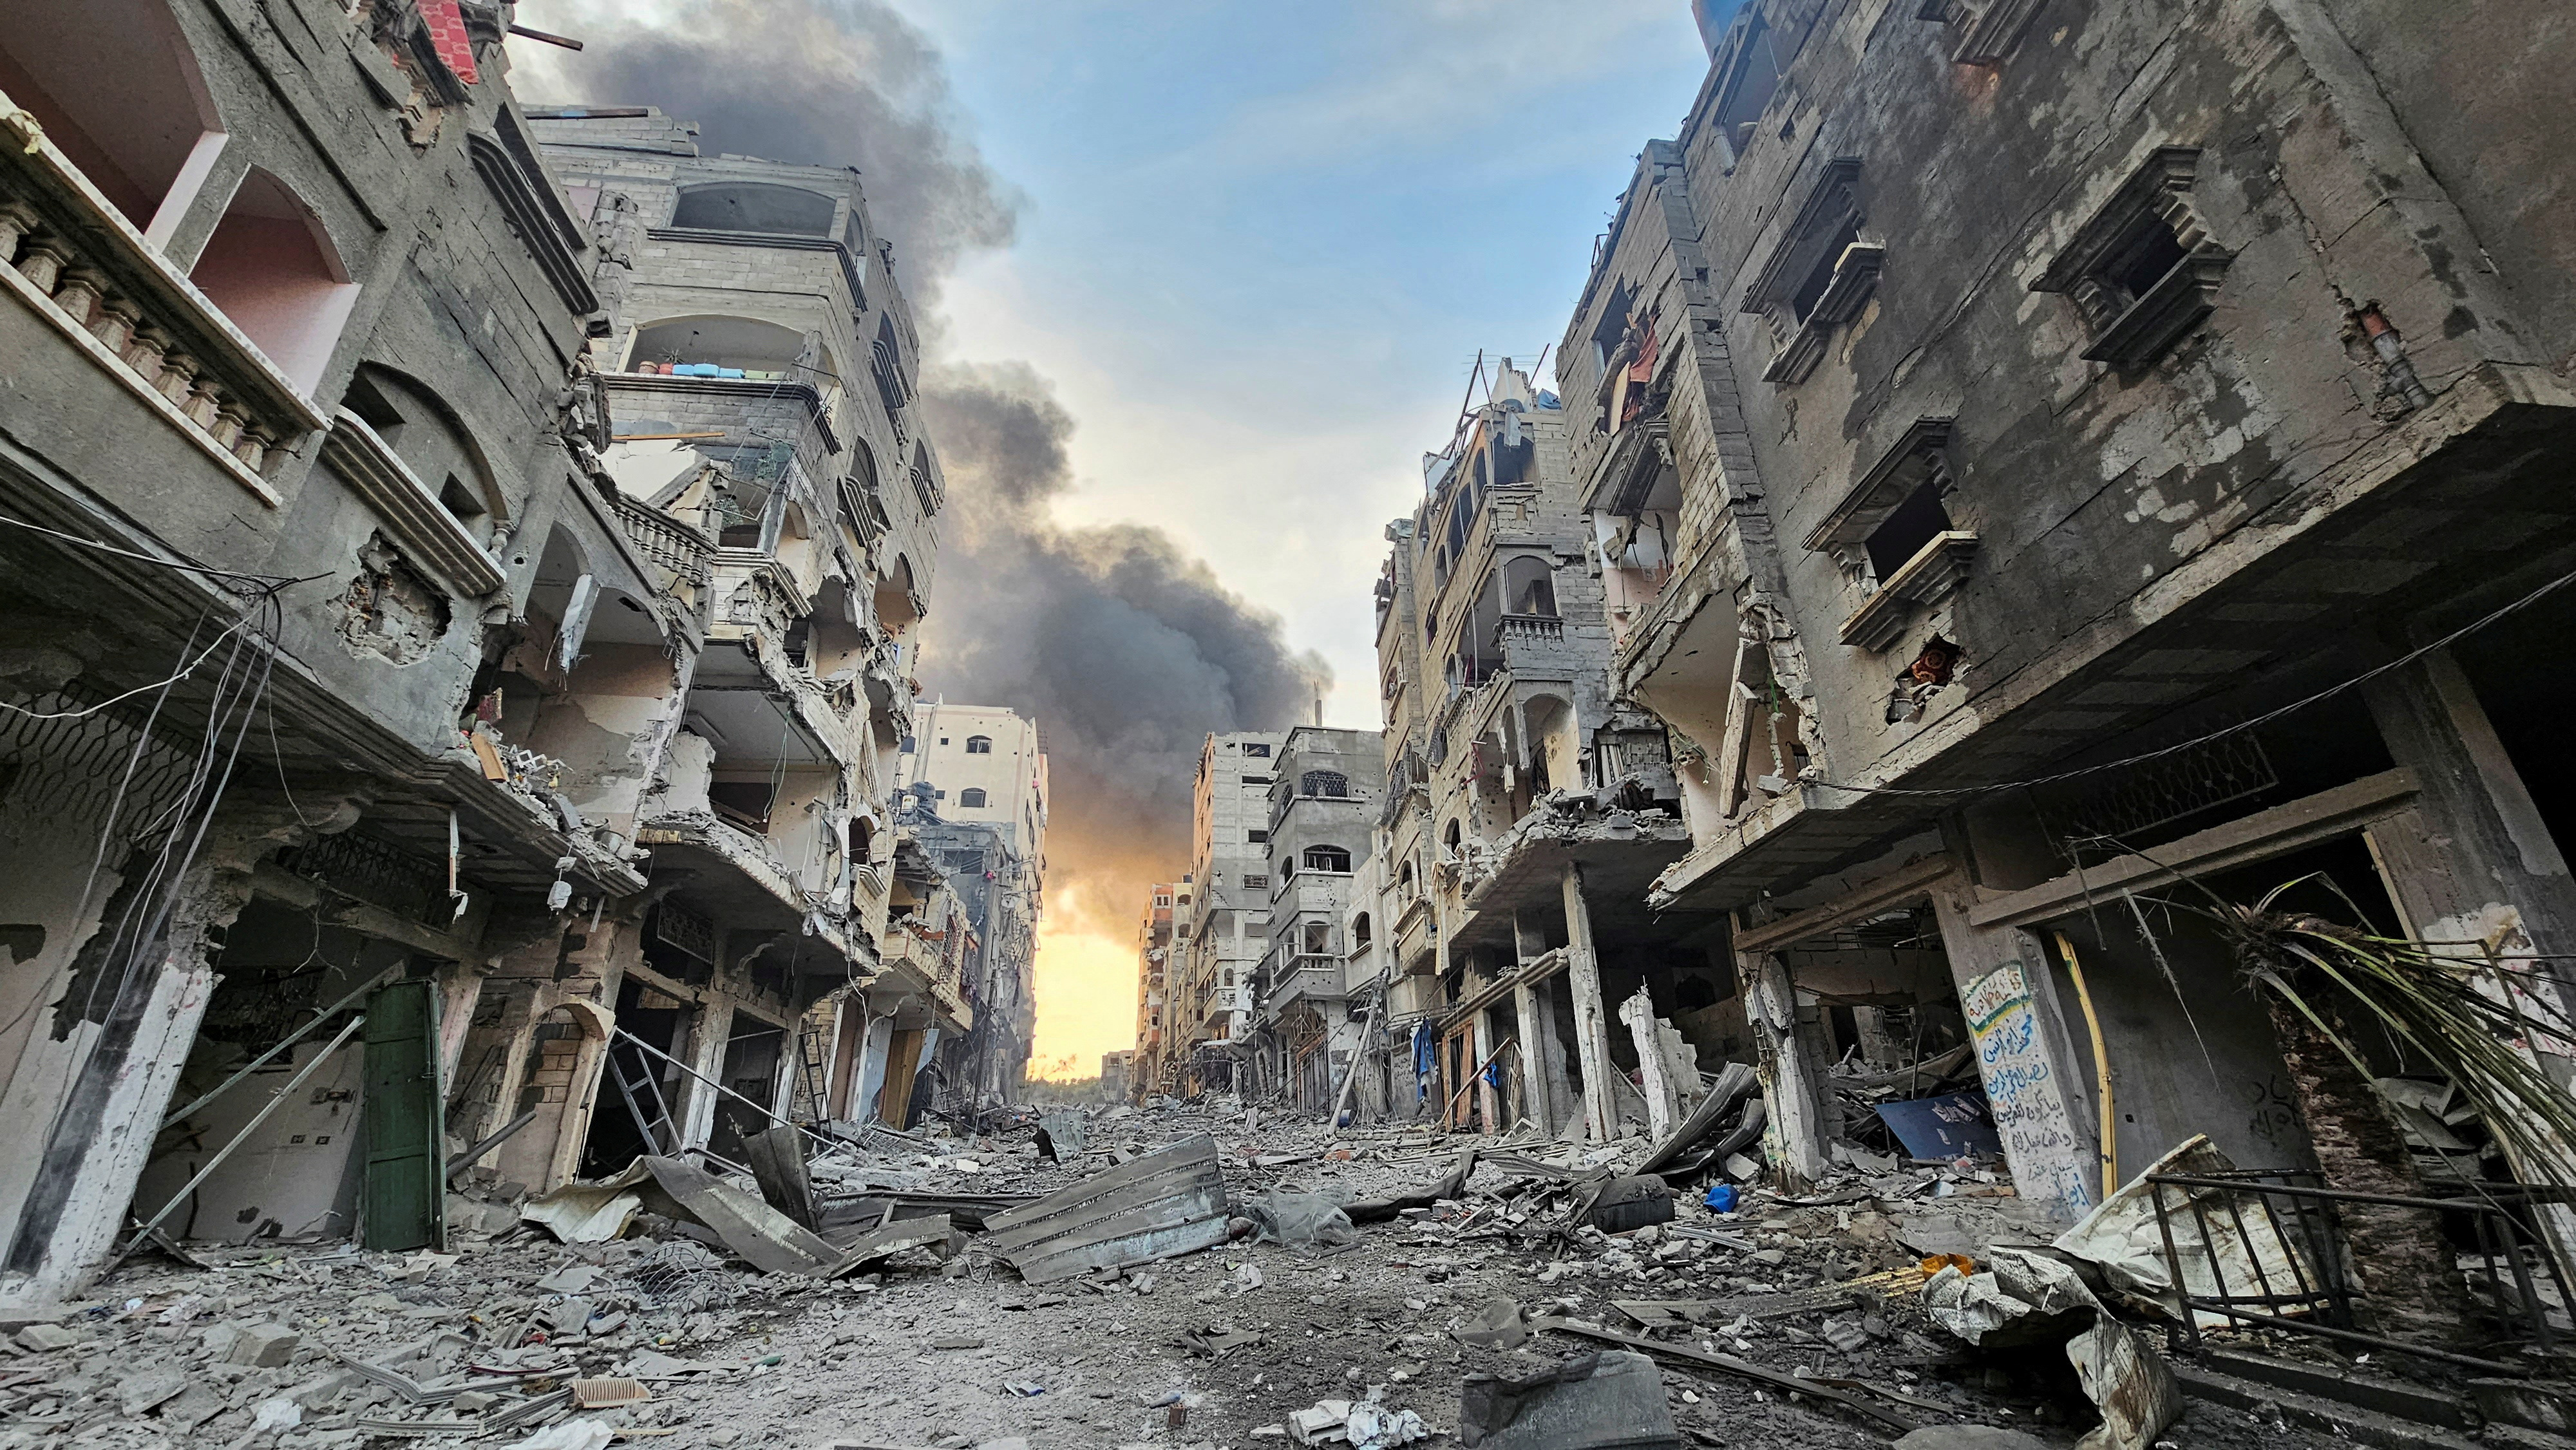 cover Gaza bombing has caused major environmental damage, UN says